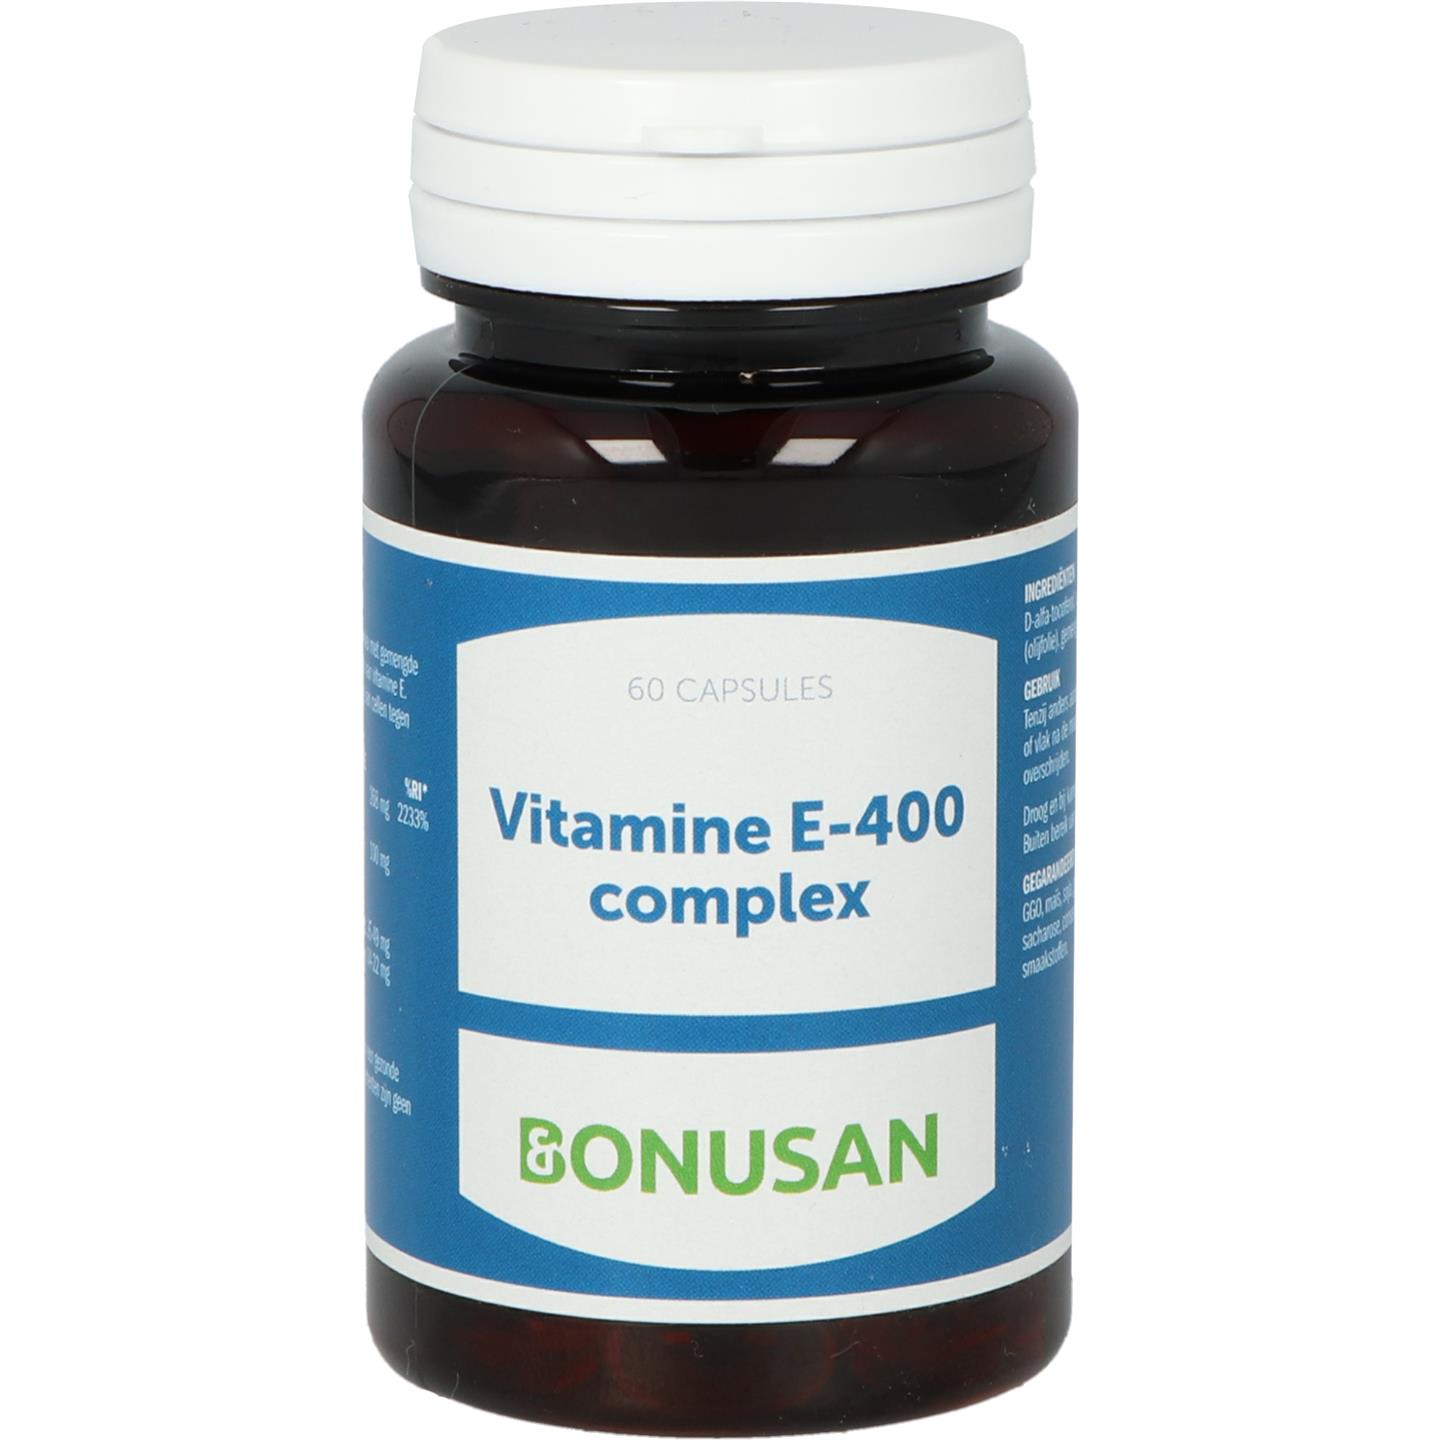 Vitamine E-400 Complex (Bonusan)